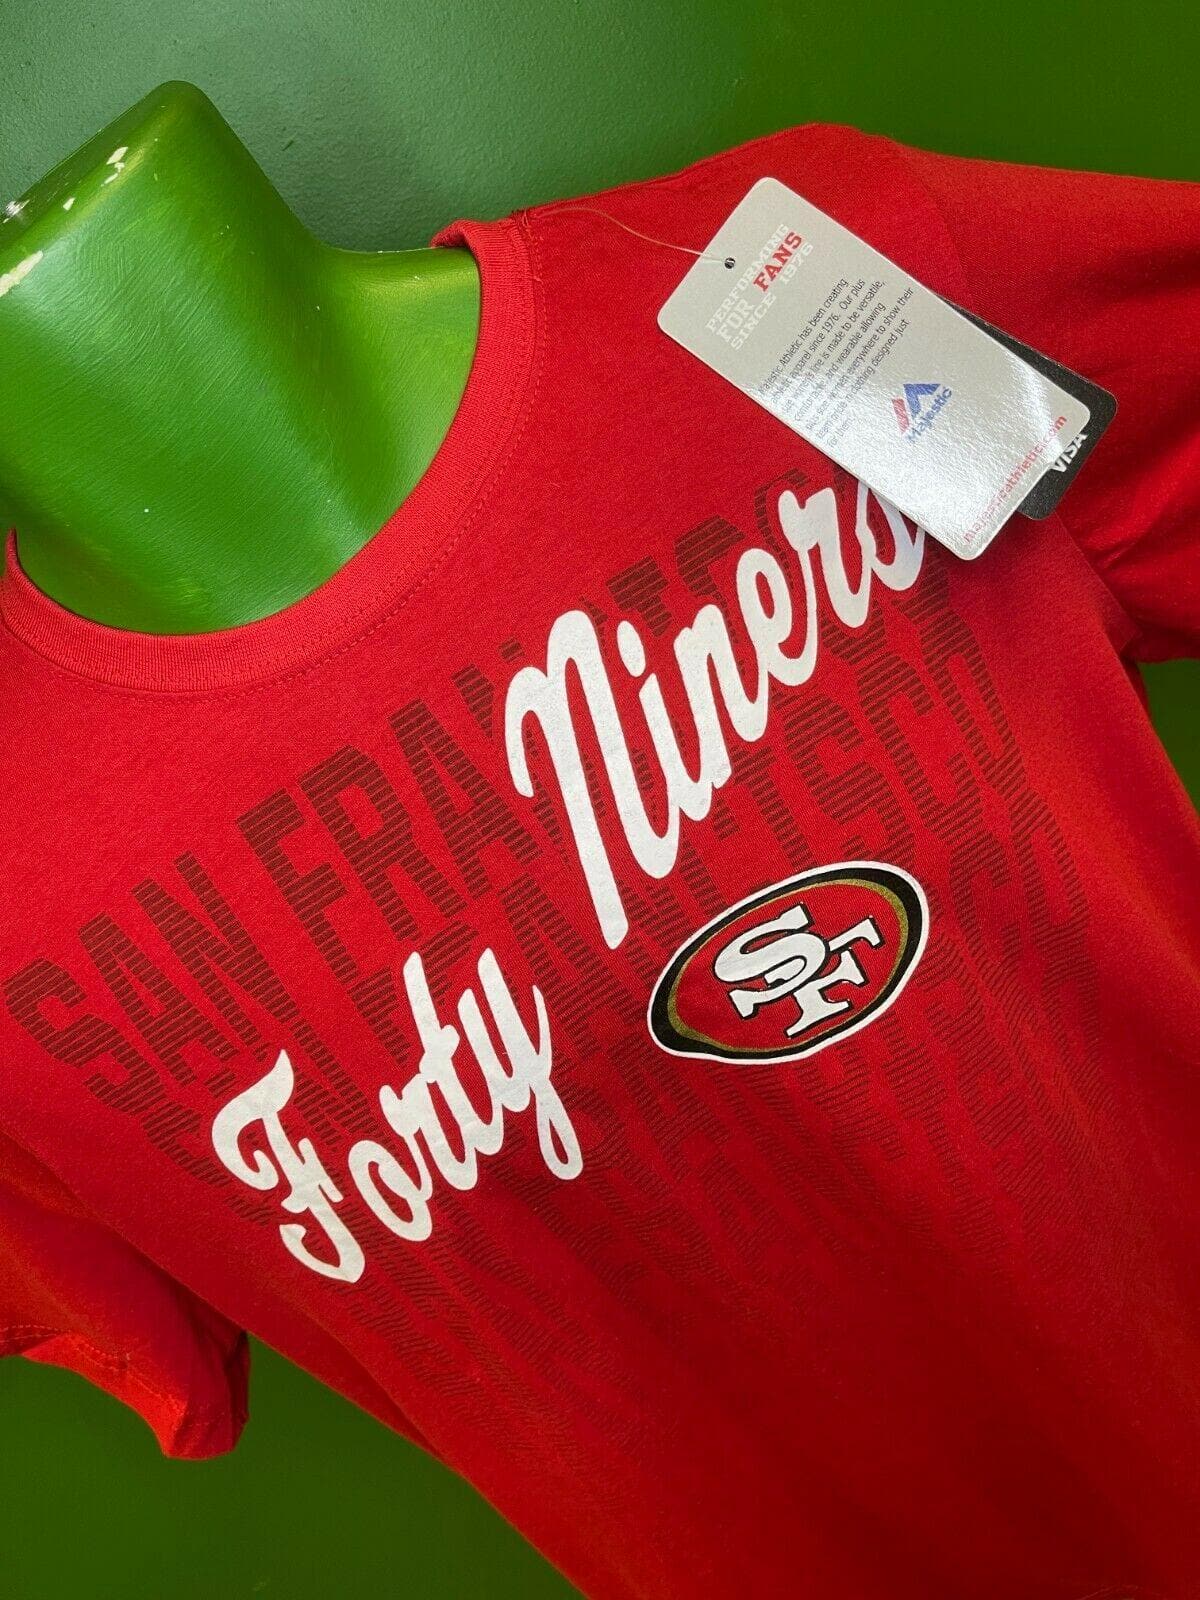 NFL San Francisco 49ers Majestic Women's Plus Size T-Shirt Medium NWT